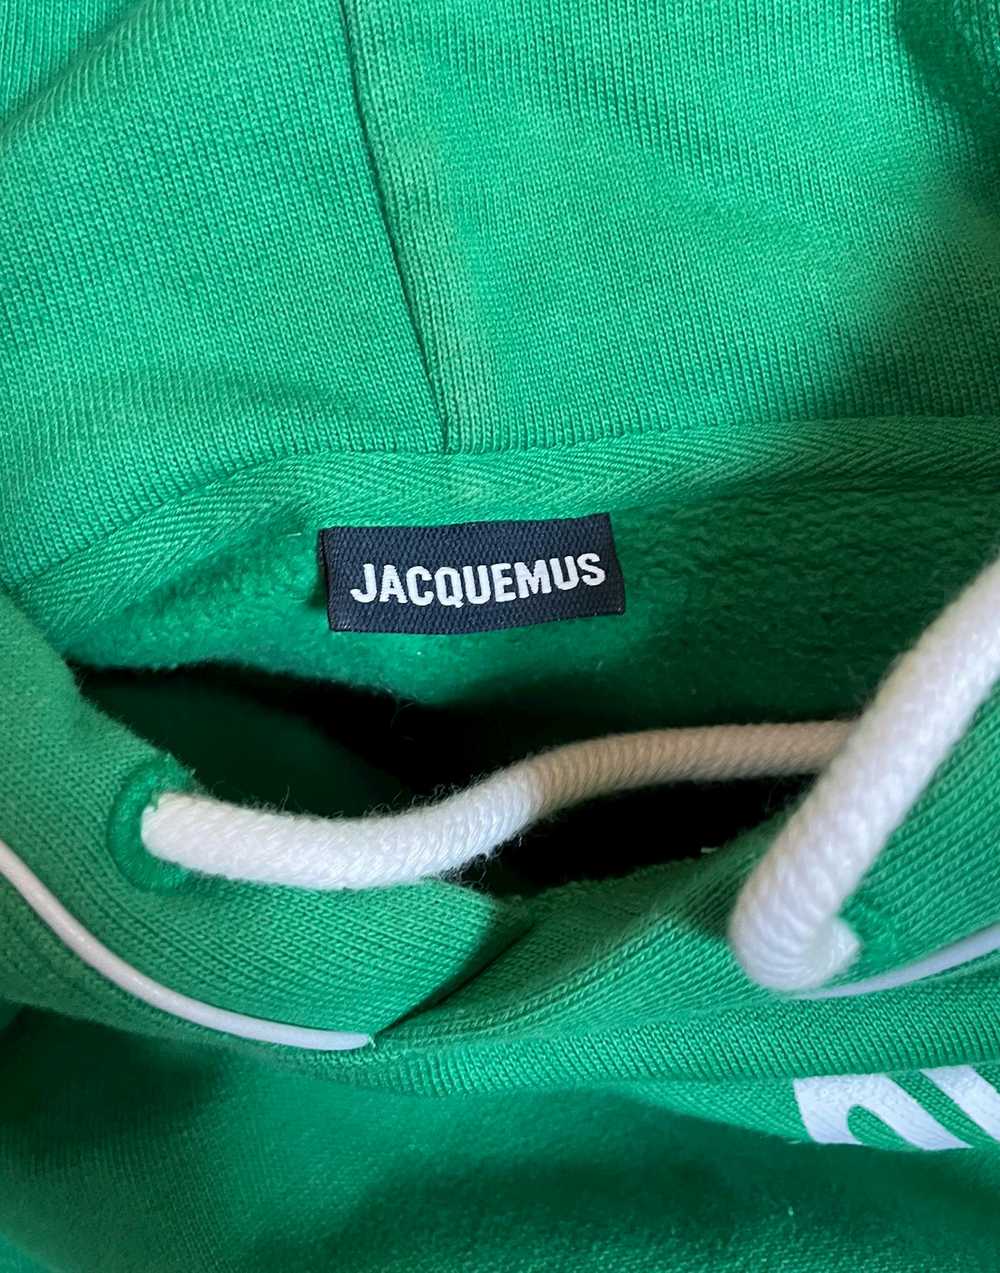 Jacquemus Le Sweatshirt Vague in Green - image 4